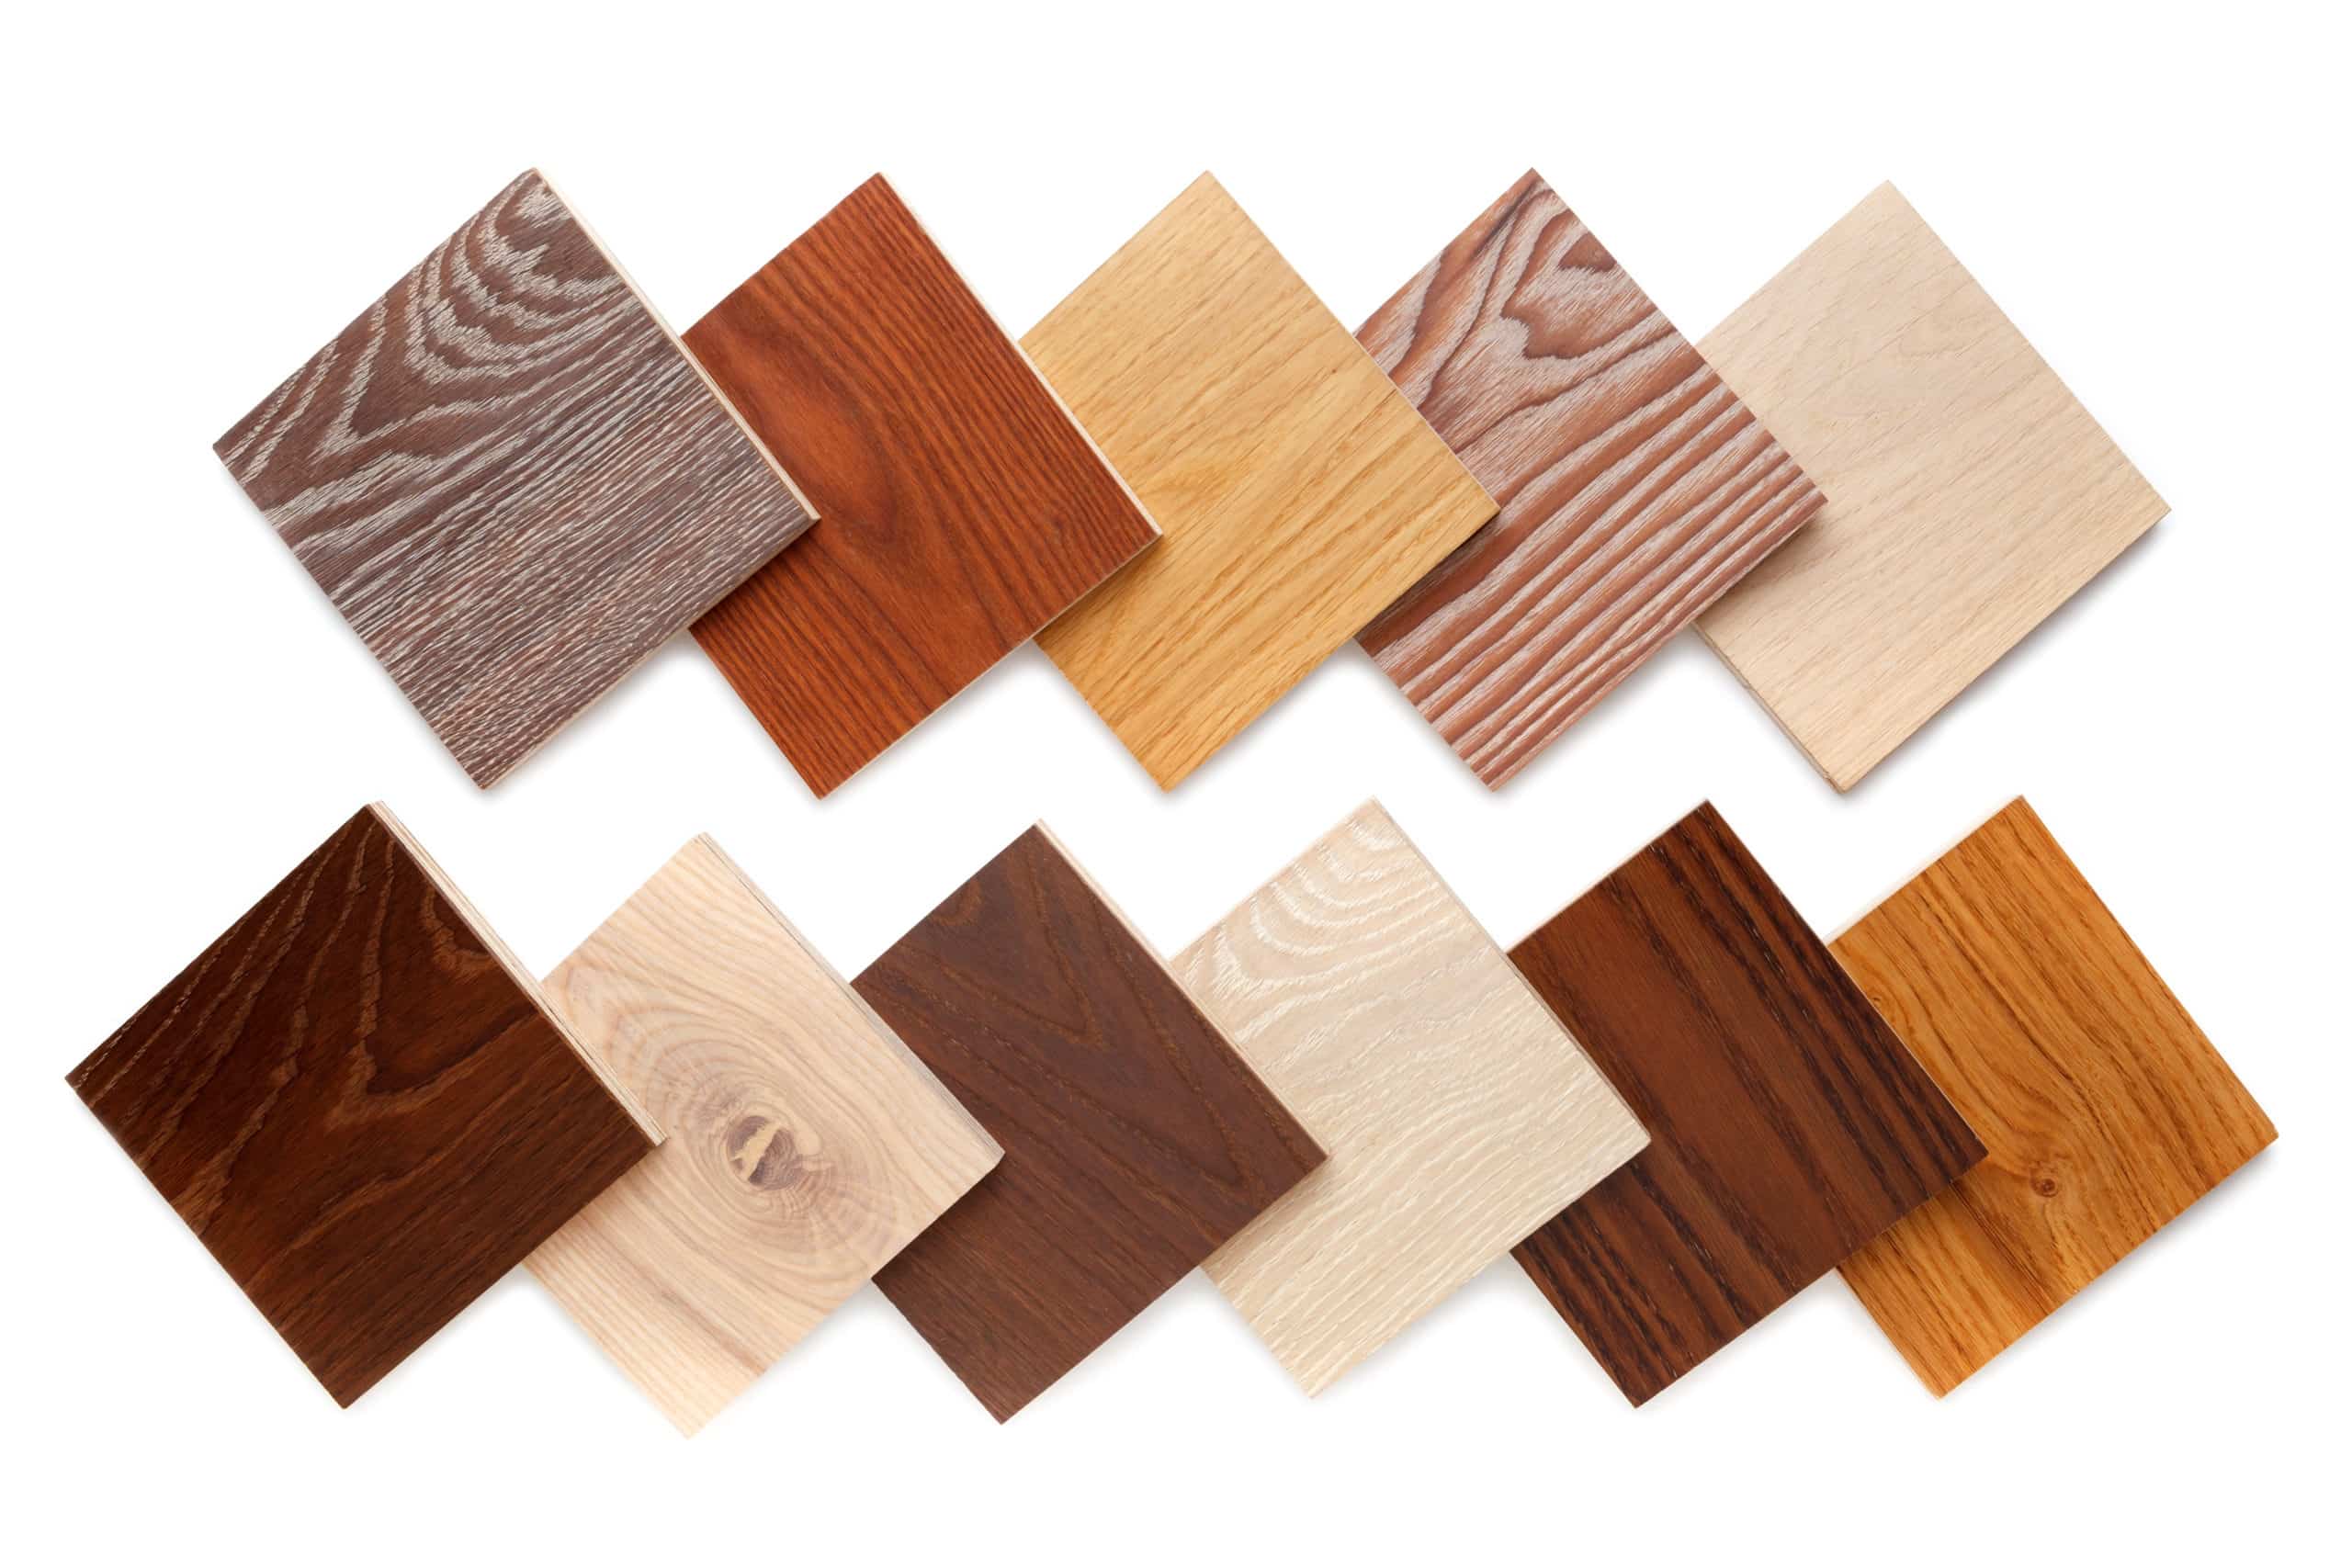 Wood Sample Options